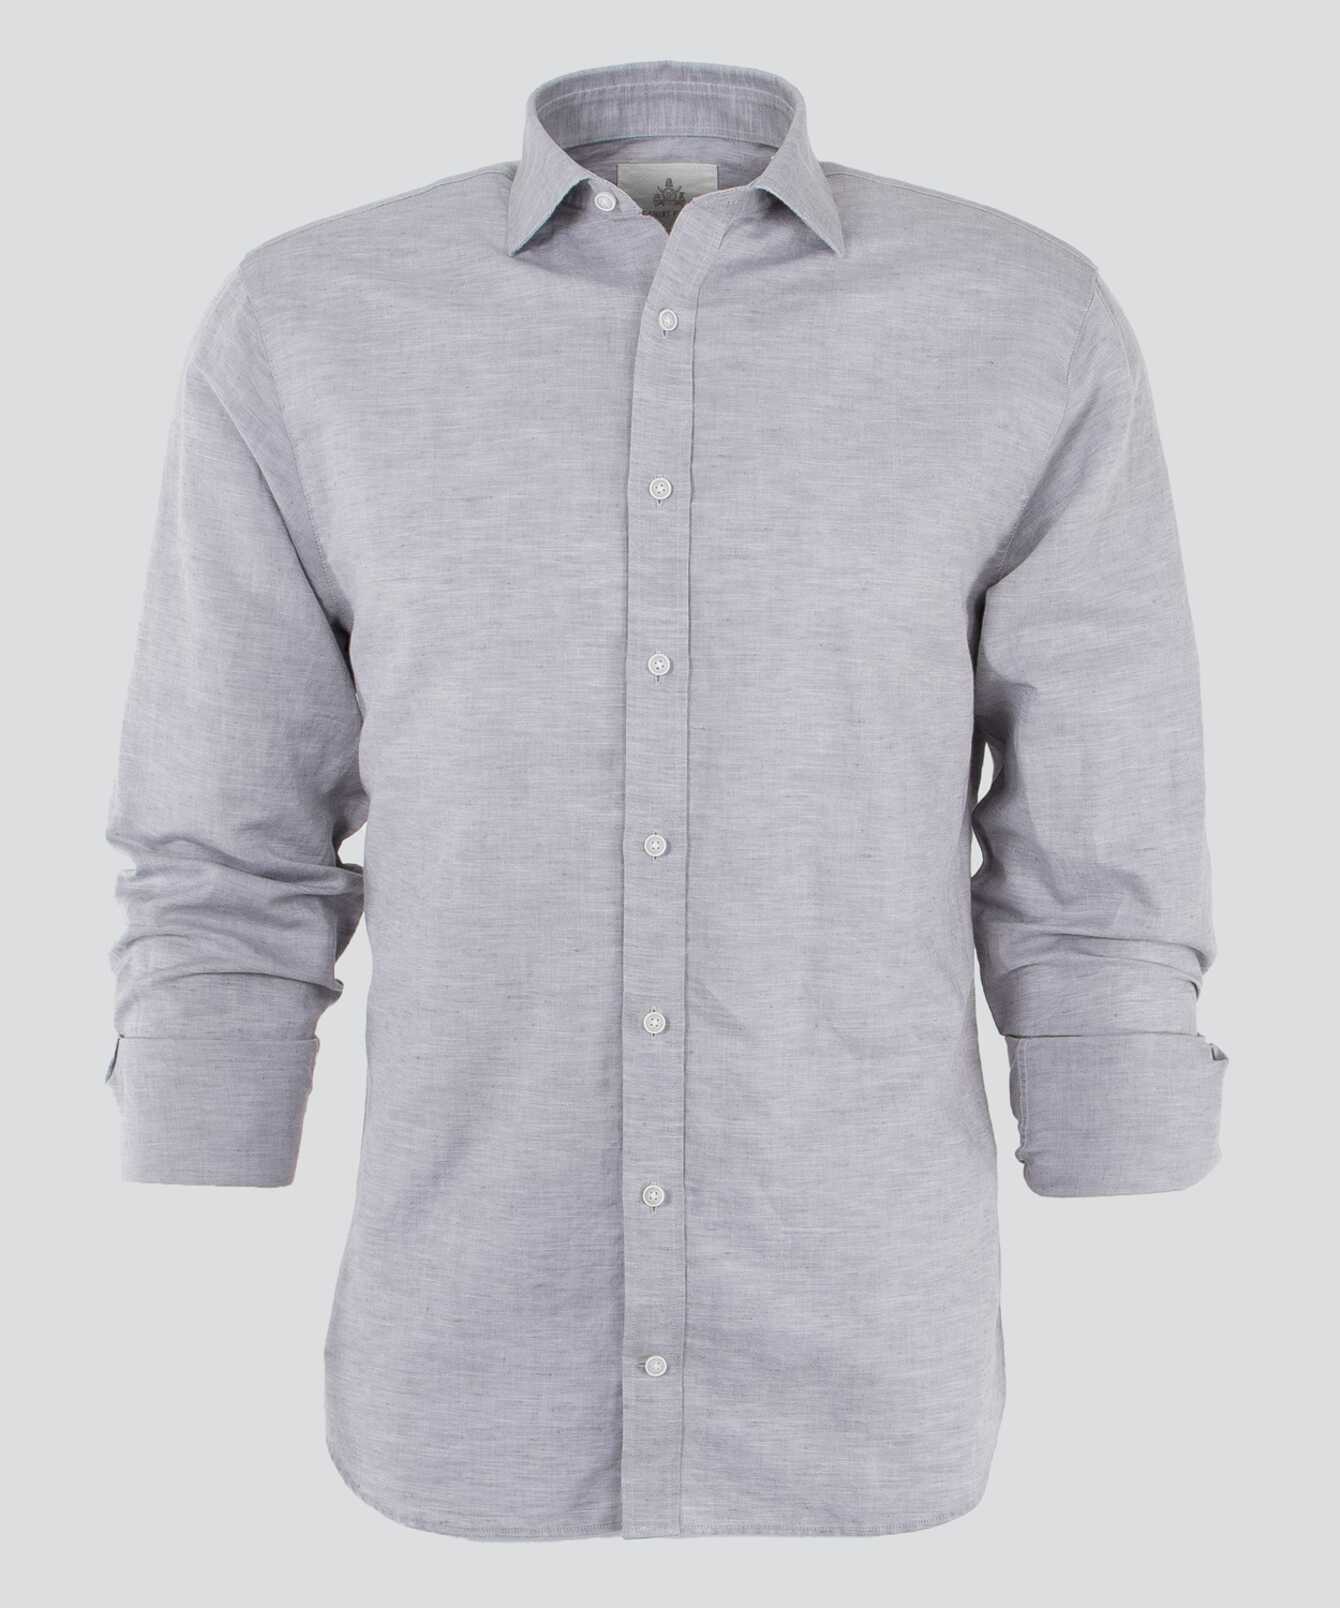 Shirt Portofino Linen Grey The Shirt Factory